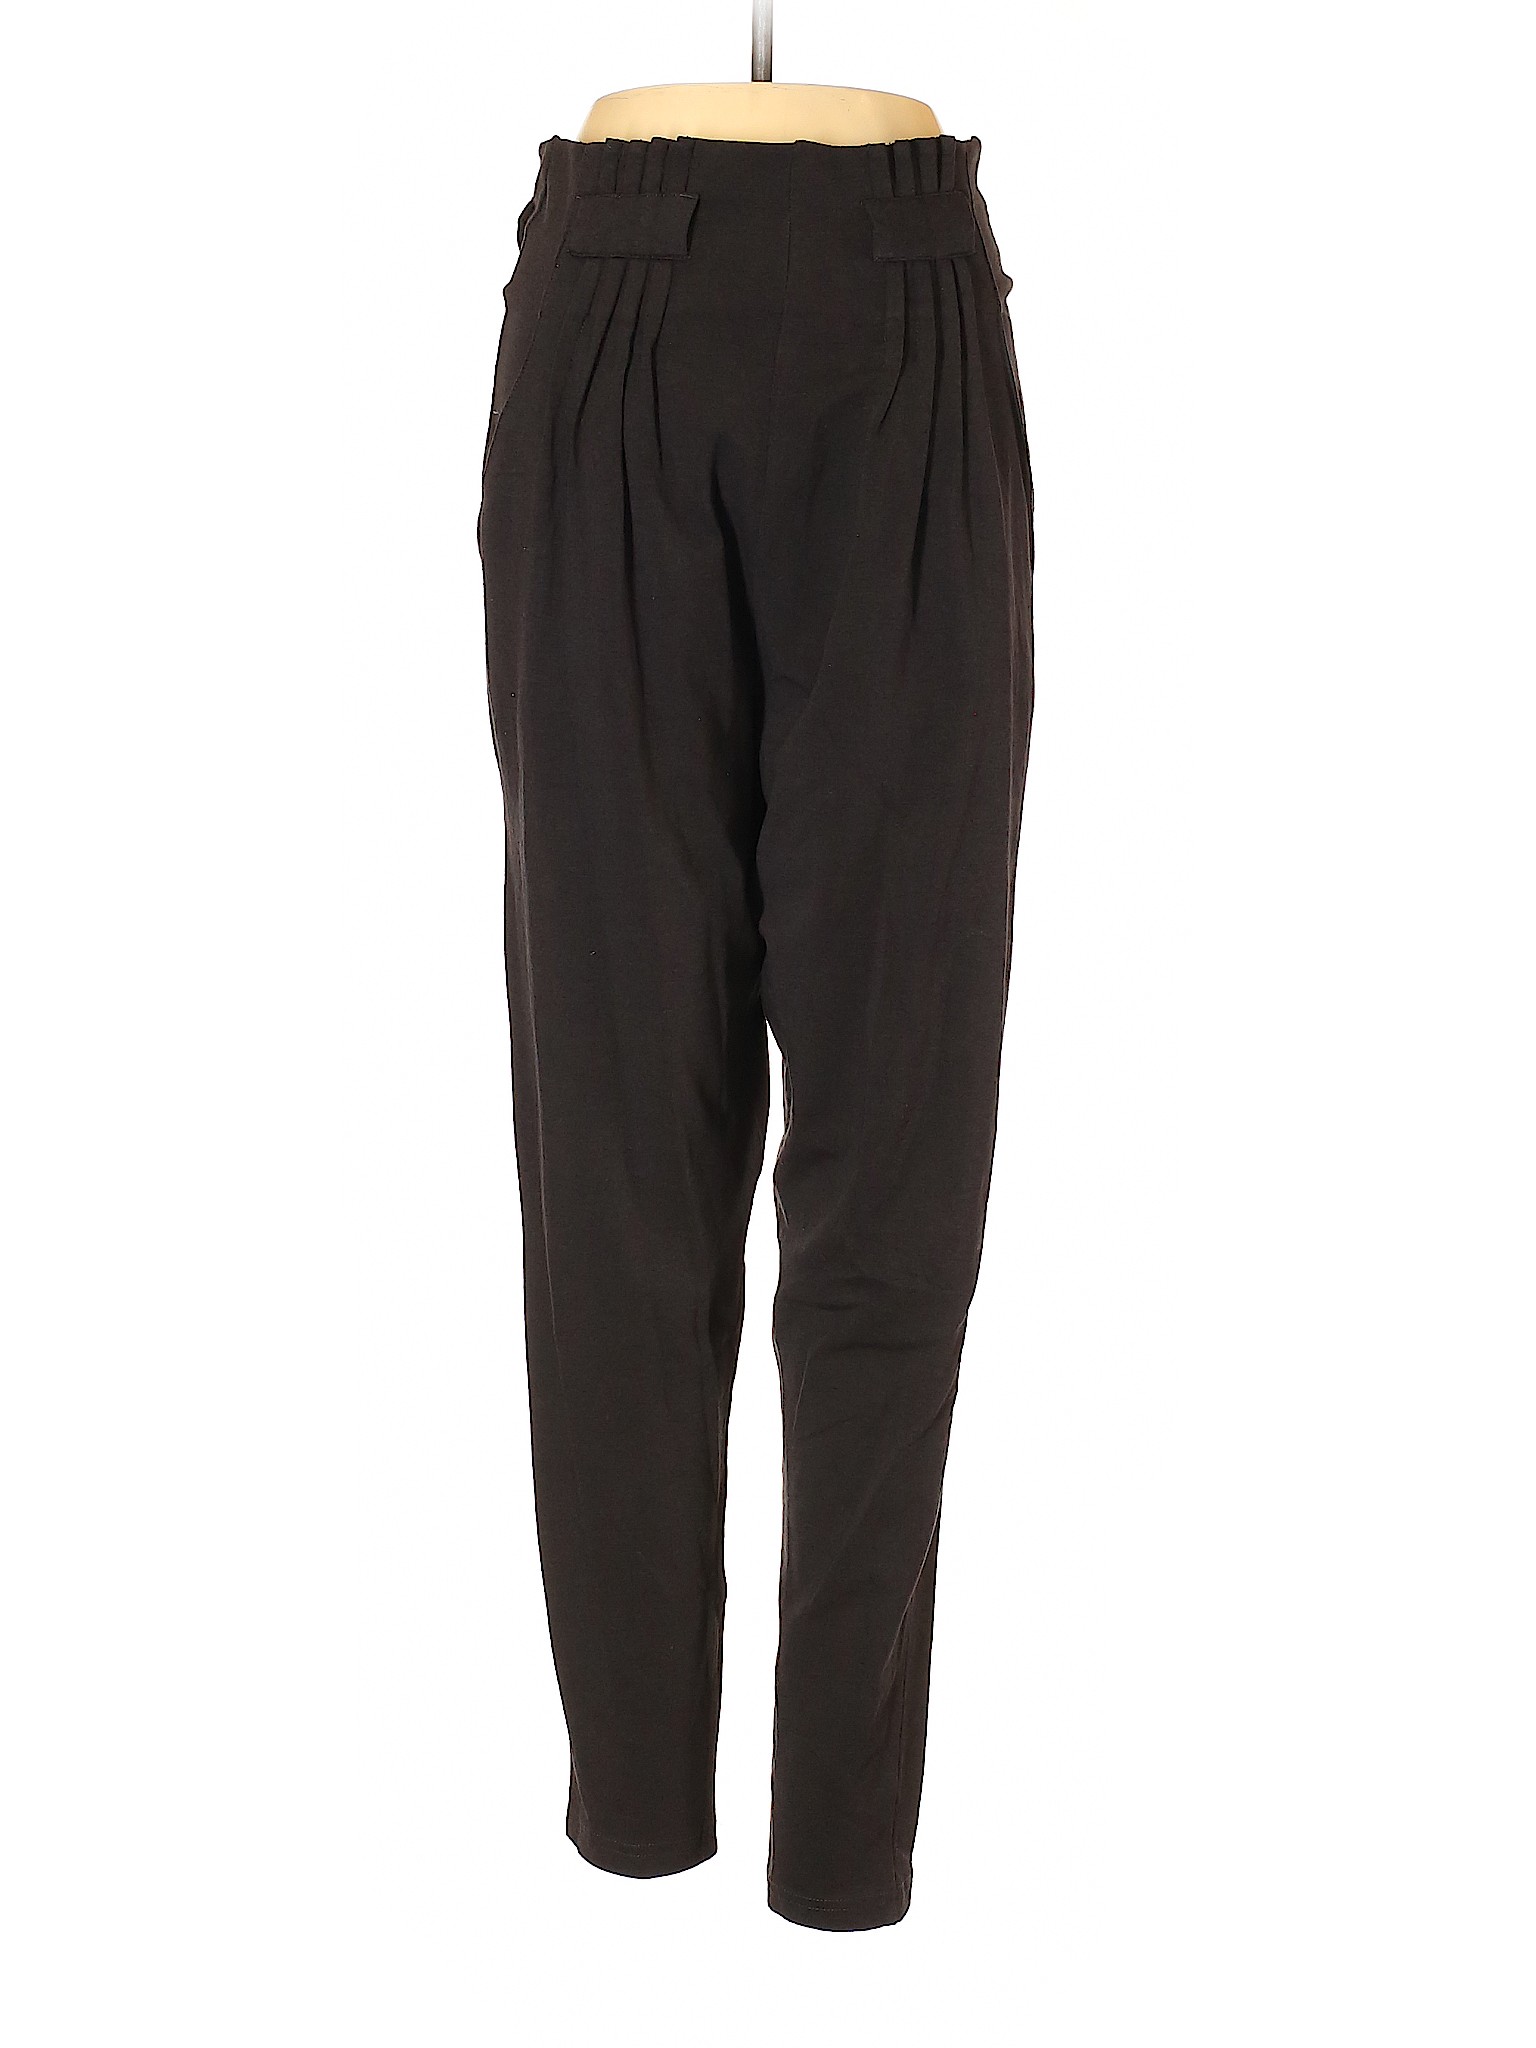 H&M Women Black Casual Pants 2 | eBay